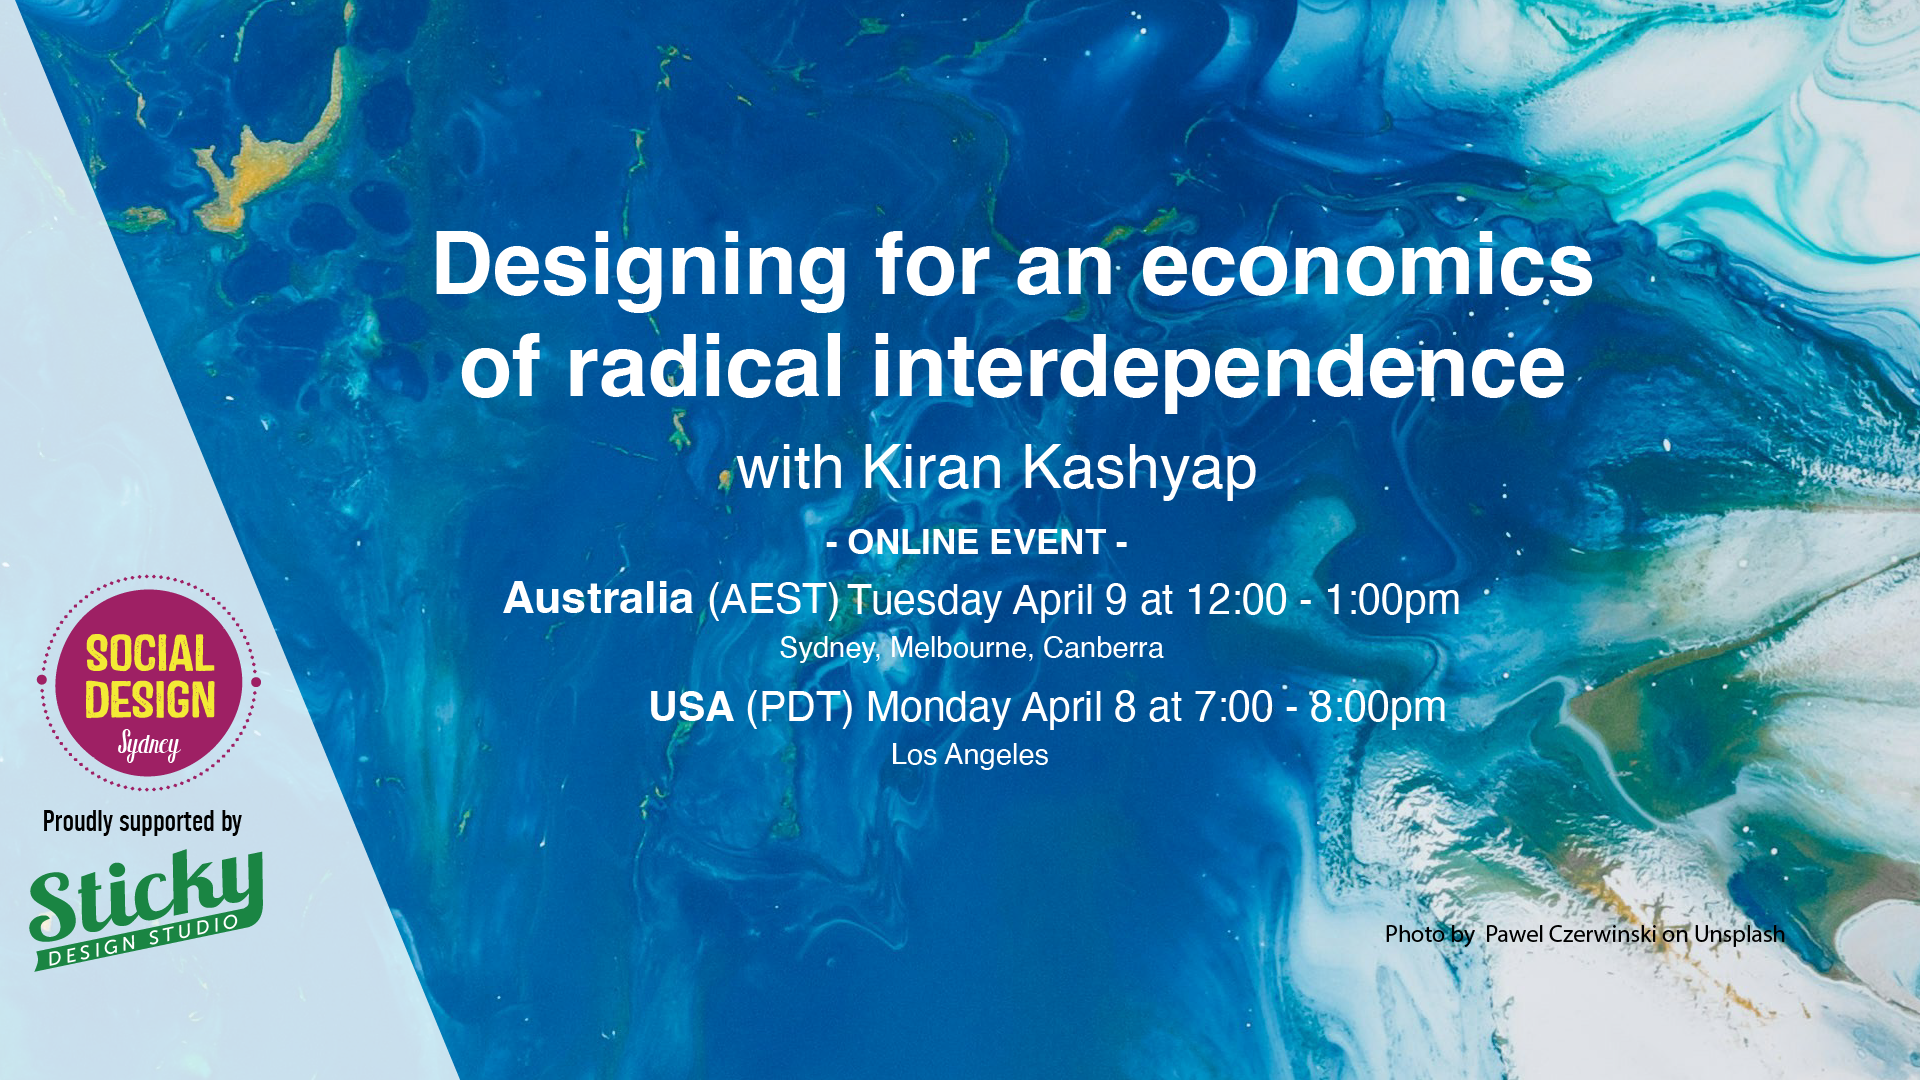 Designing for an economics of radical interdependence with Kiran Kashyap on blue backgorund. Social Design Sydney logo and Sticky Design Studio logo.